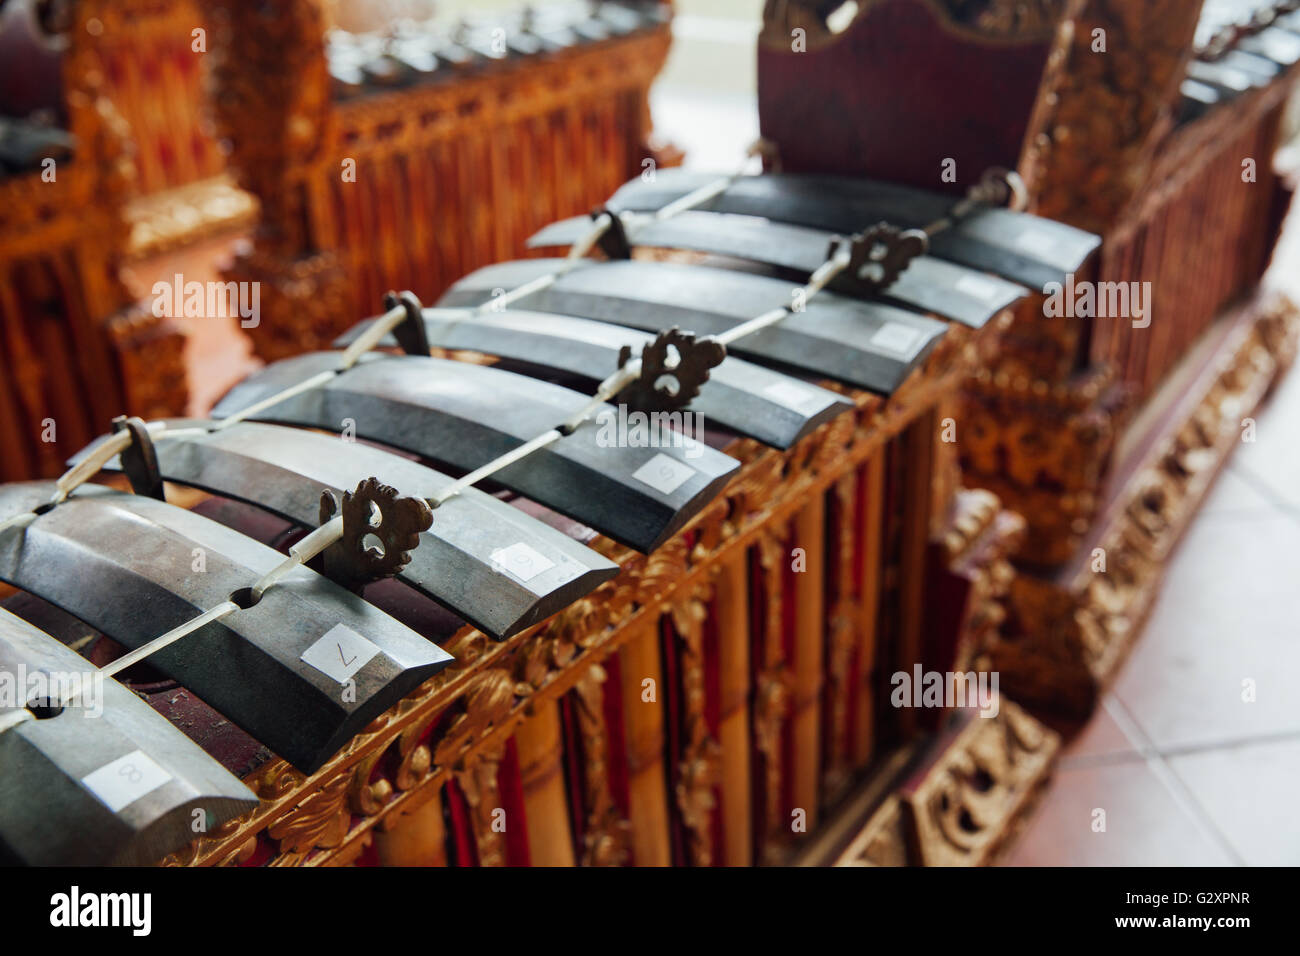 Traditional balinese percussive music instruments instruments for 'Gamelan' ensemble music, Ubud, Bali, Indonesia. Stock Photo